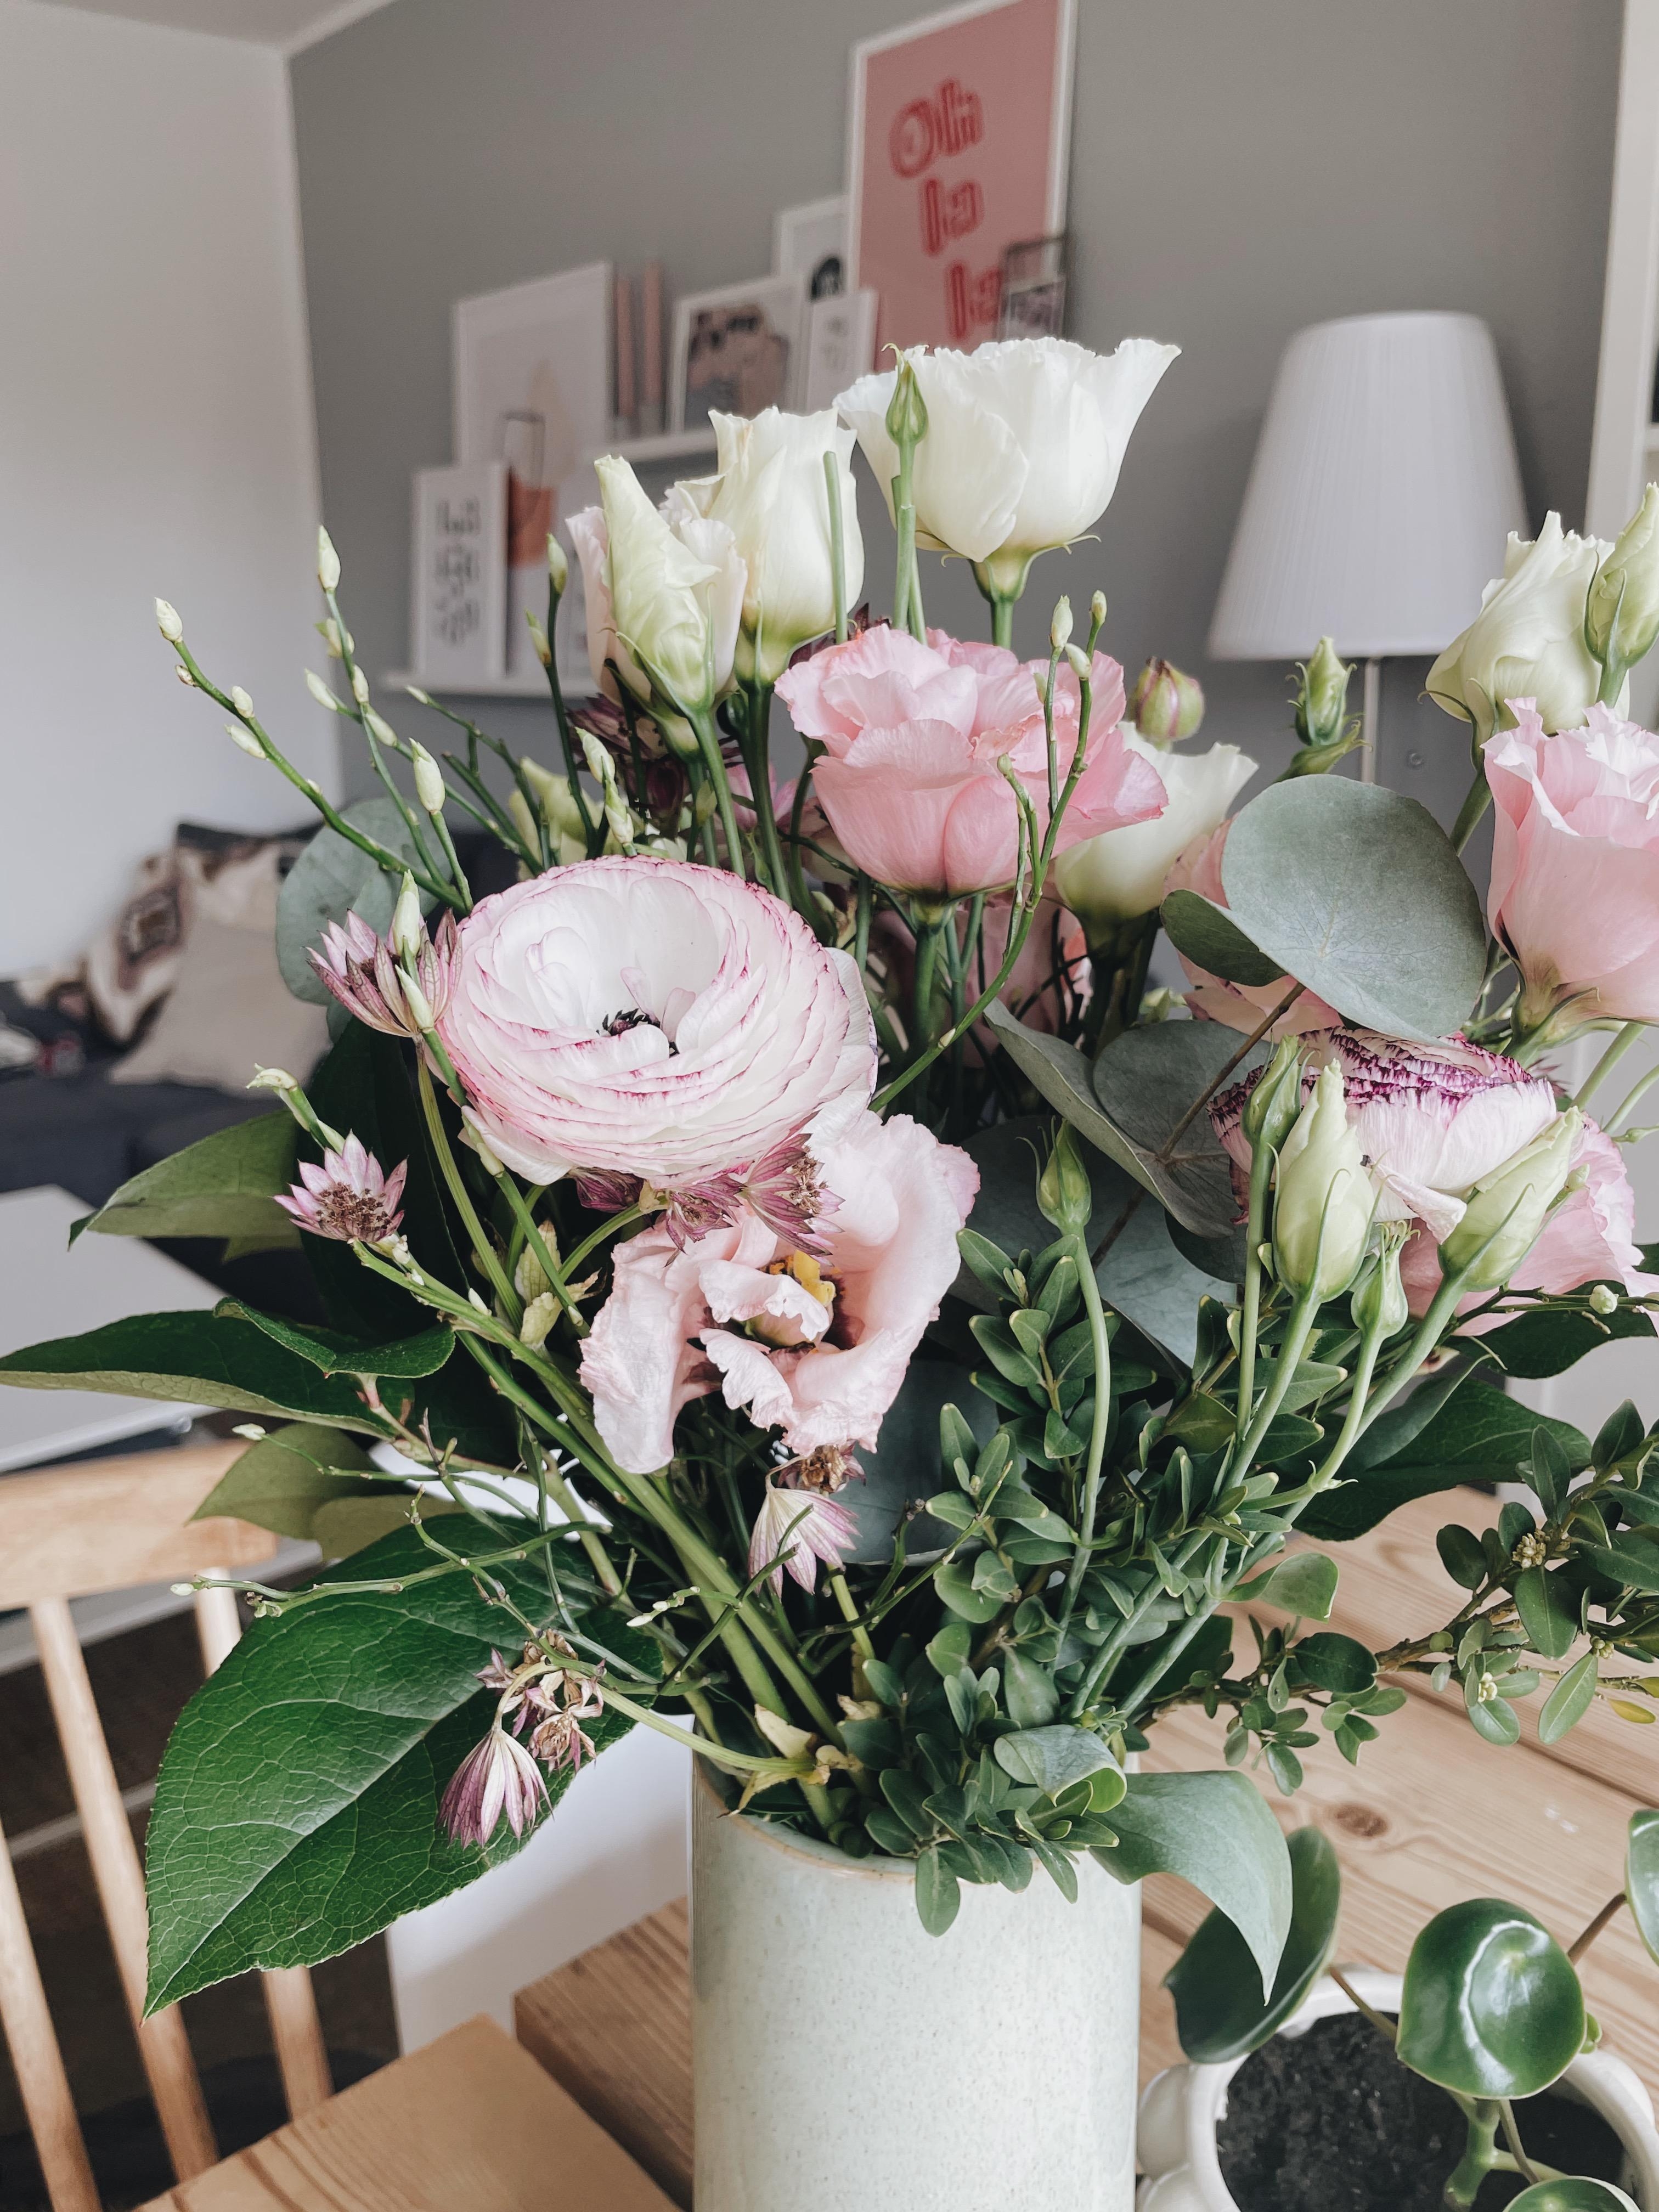 Frohe Ostern! 🐰
#flowers #happyeaster #home #blumenliebe 